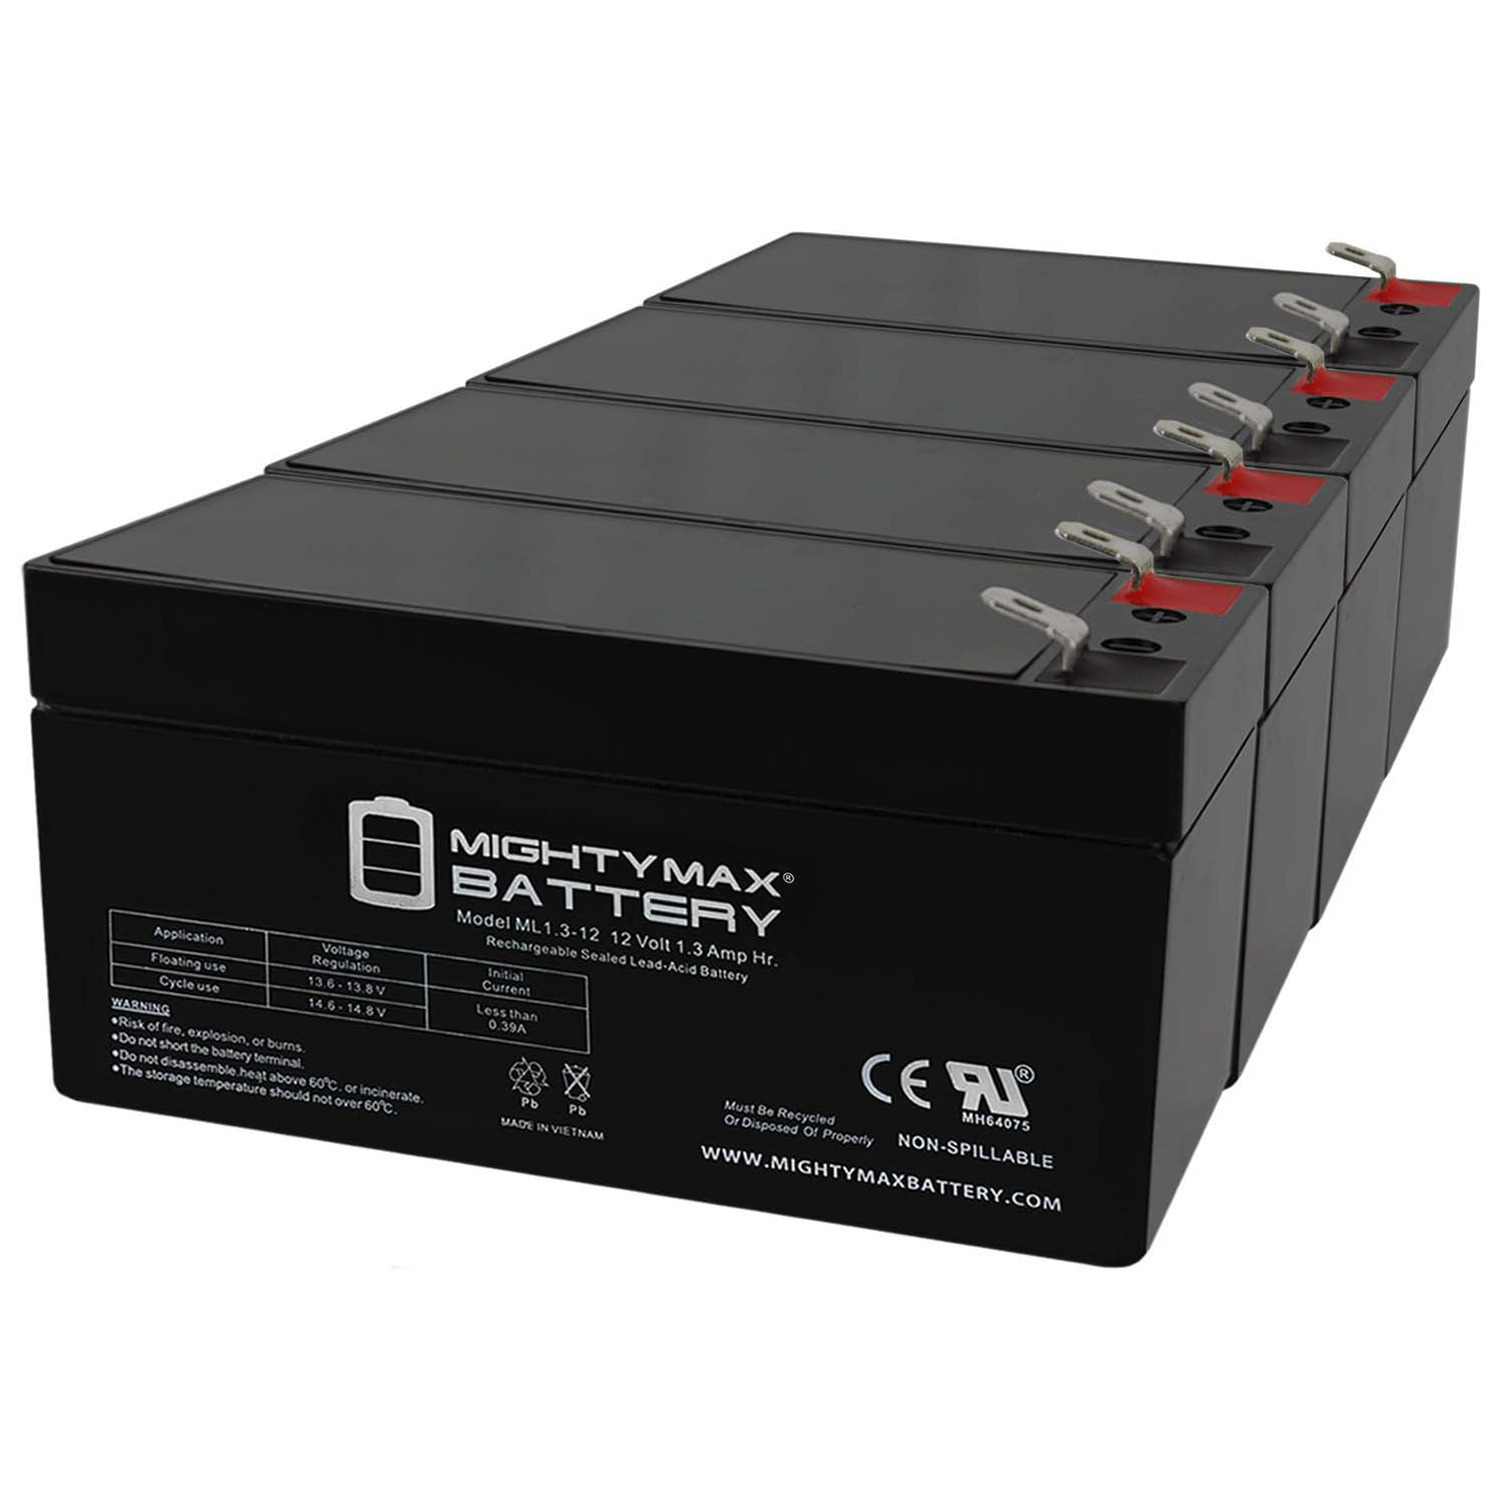 12V 1.3Ah Replacement Battery for SunStone Power SPT12-1.3 - 4 Pack